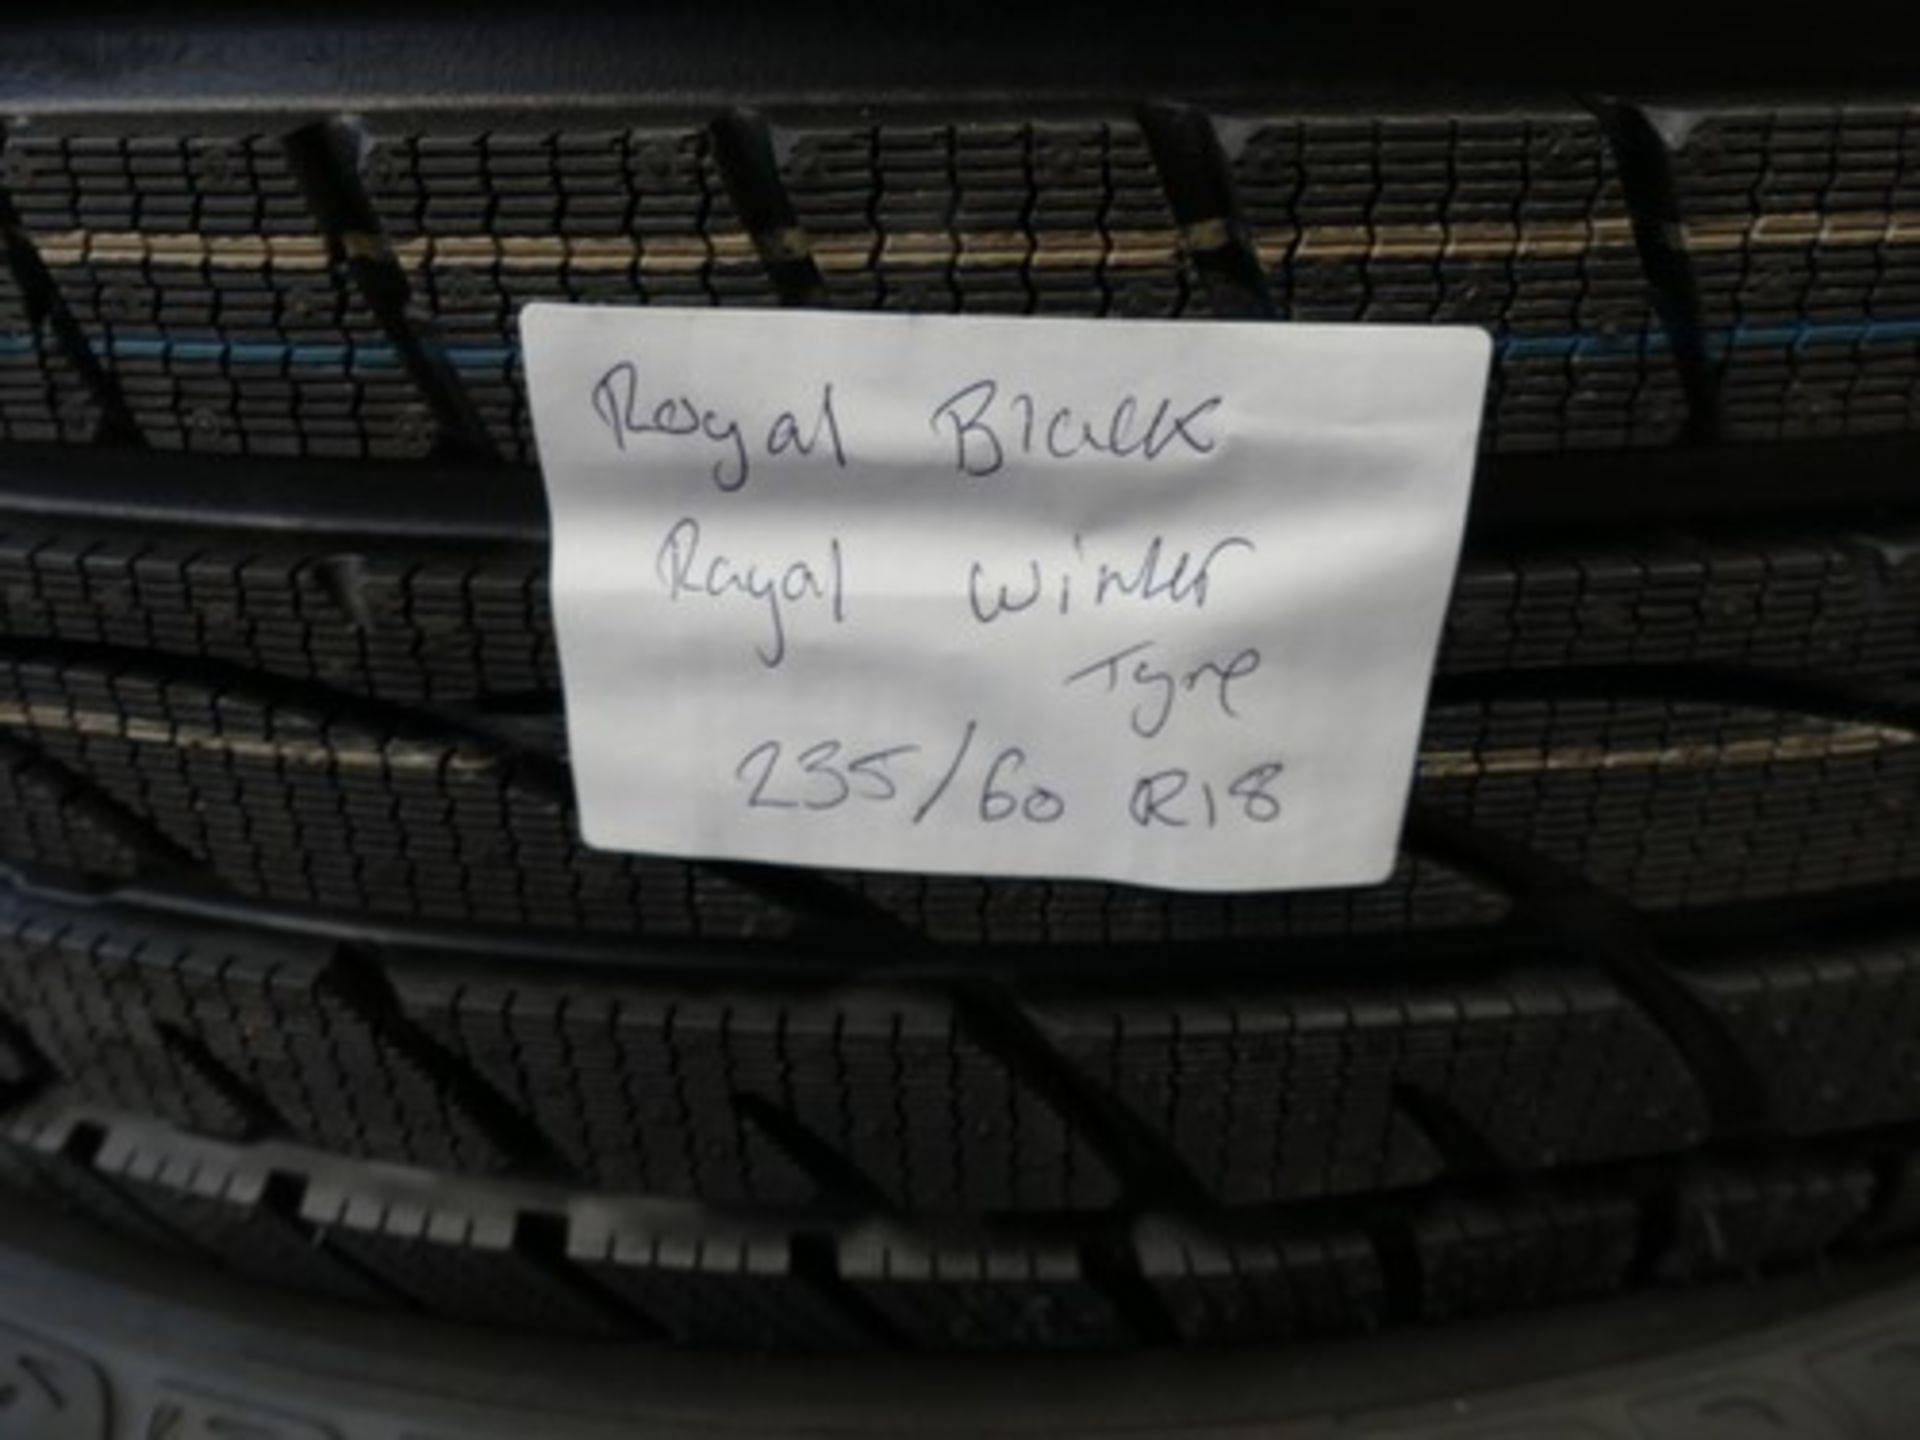 1 x Royal Black Royal winter tyre, size 235/60R18 - New (pallet 2)